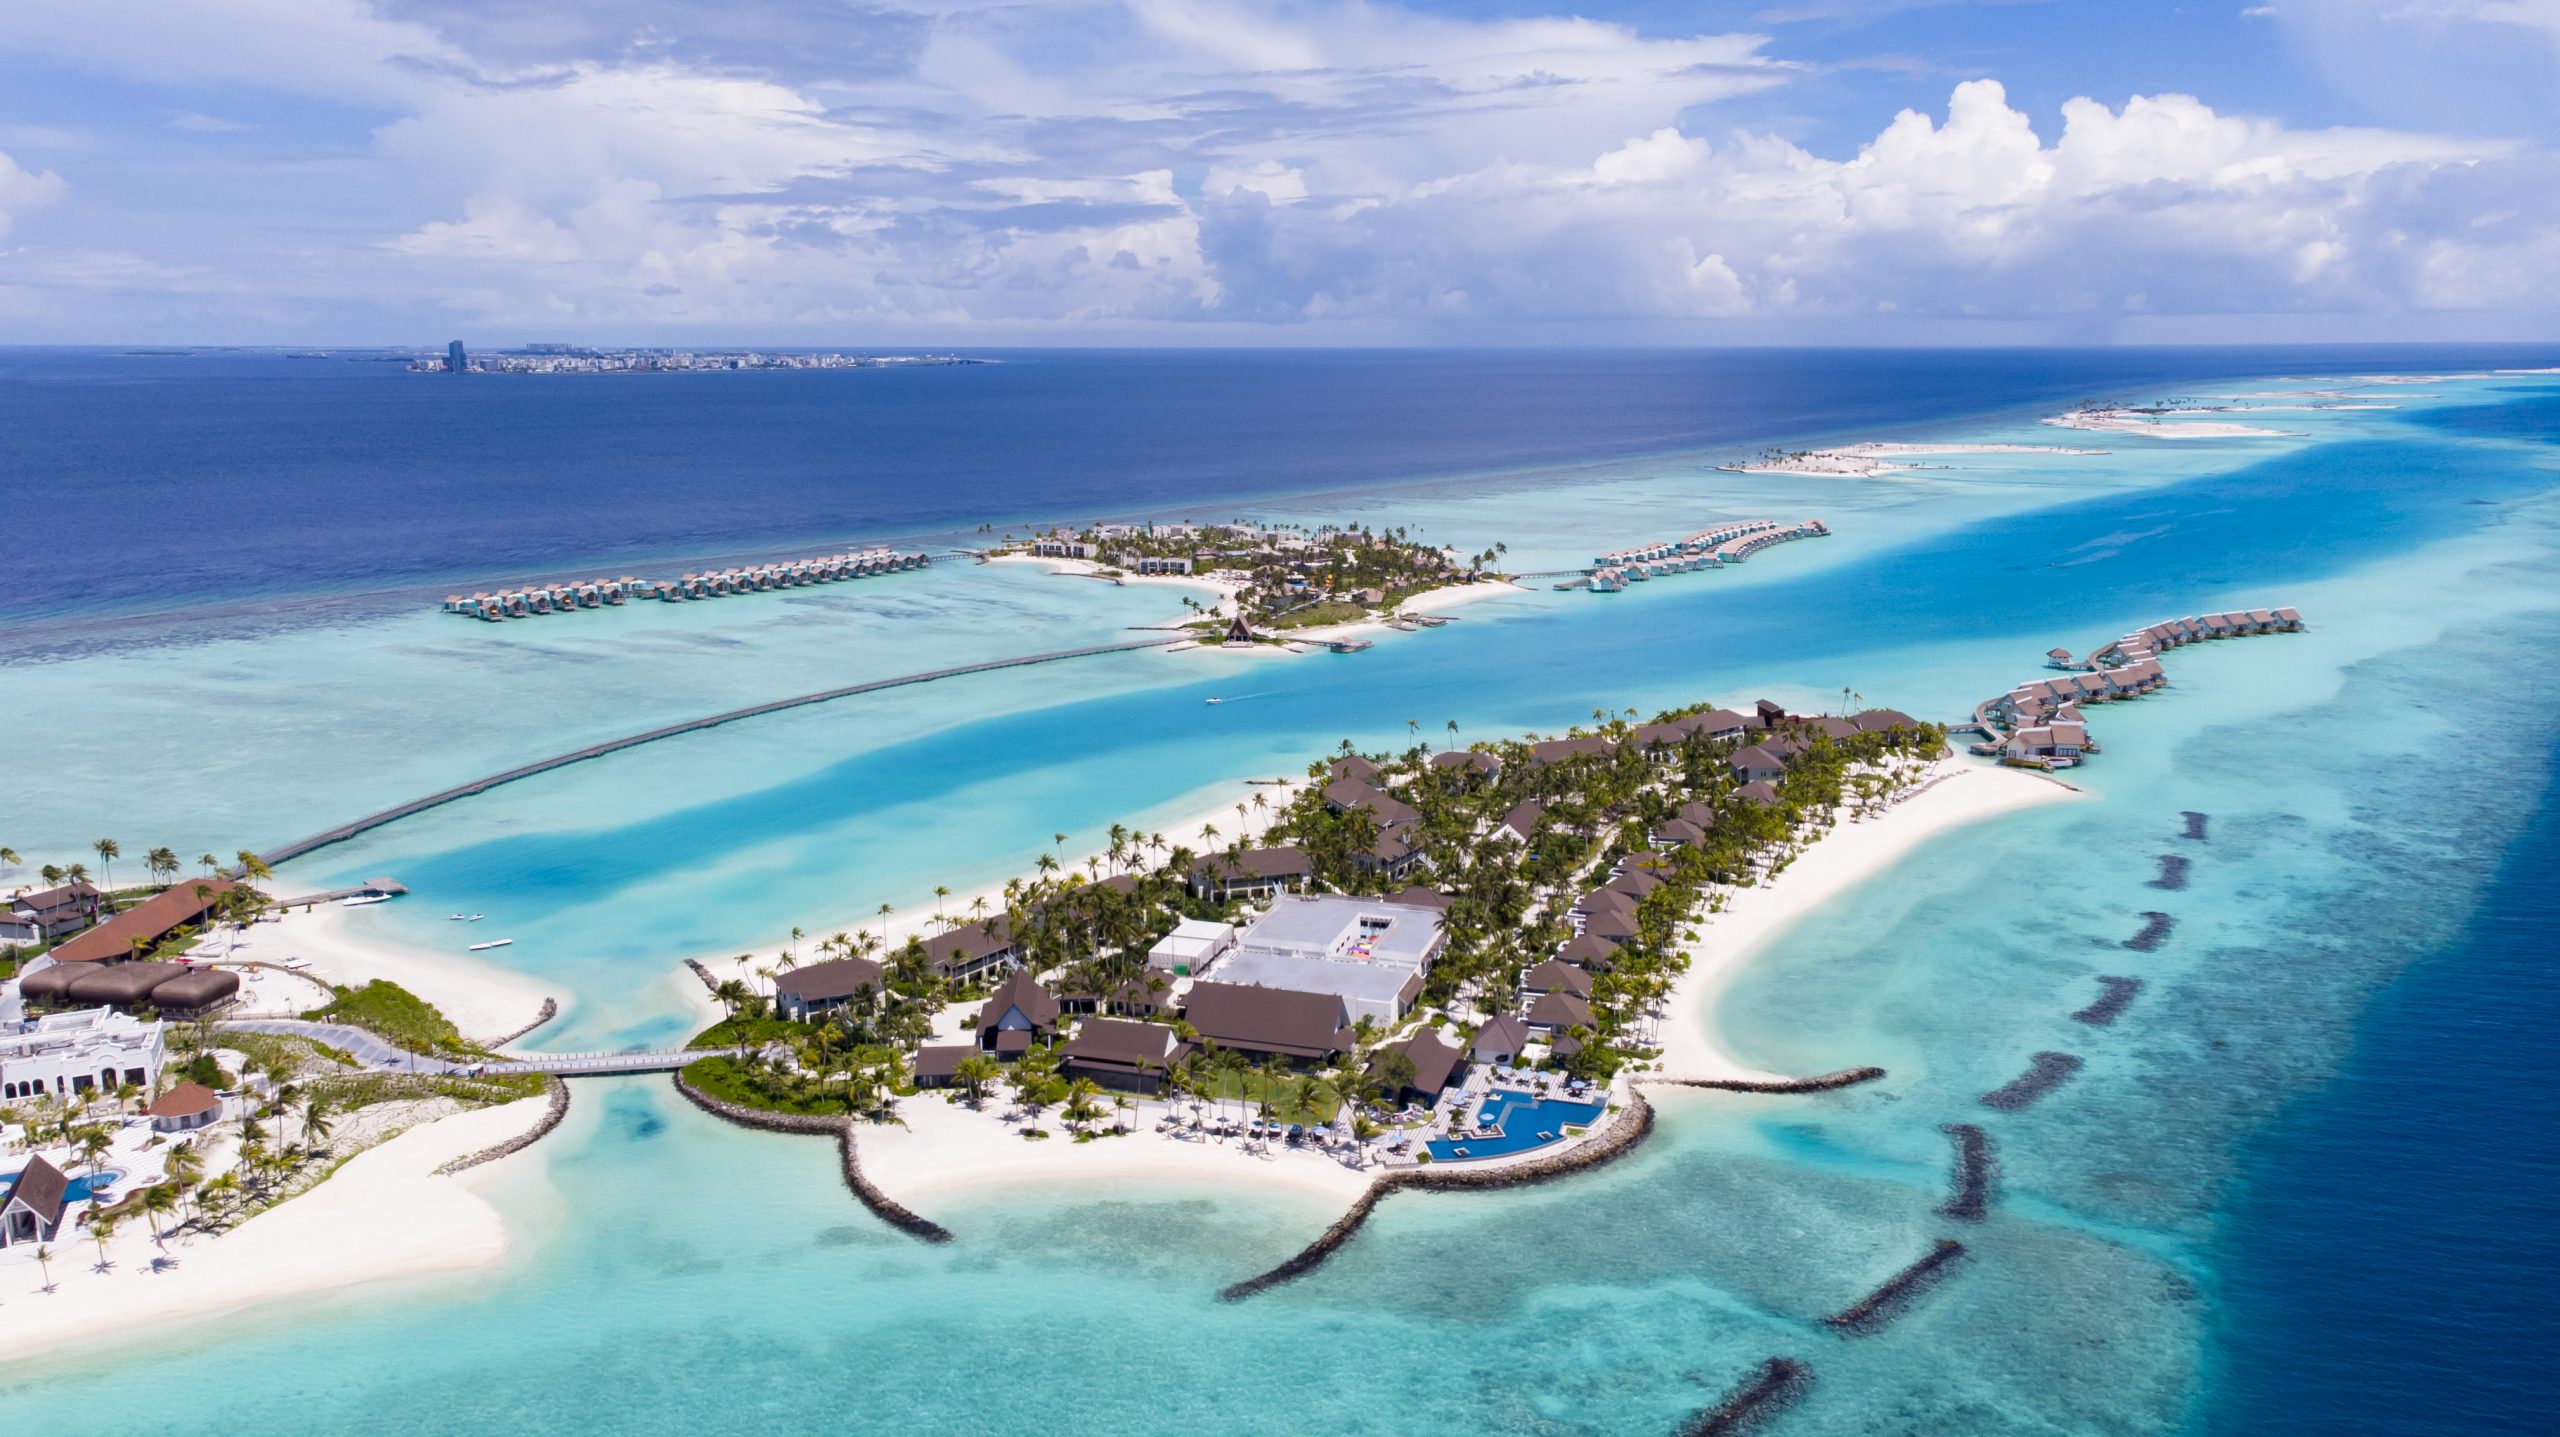 Hard Rock Hotel Maldives and SAii Lagoon Maldives Wins Best Luxury